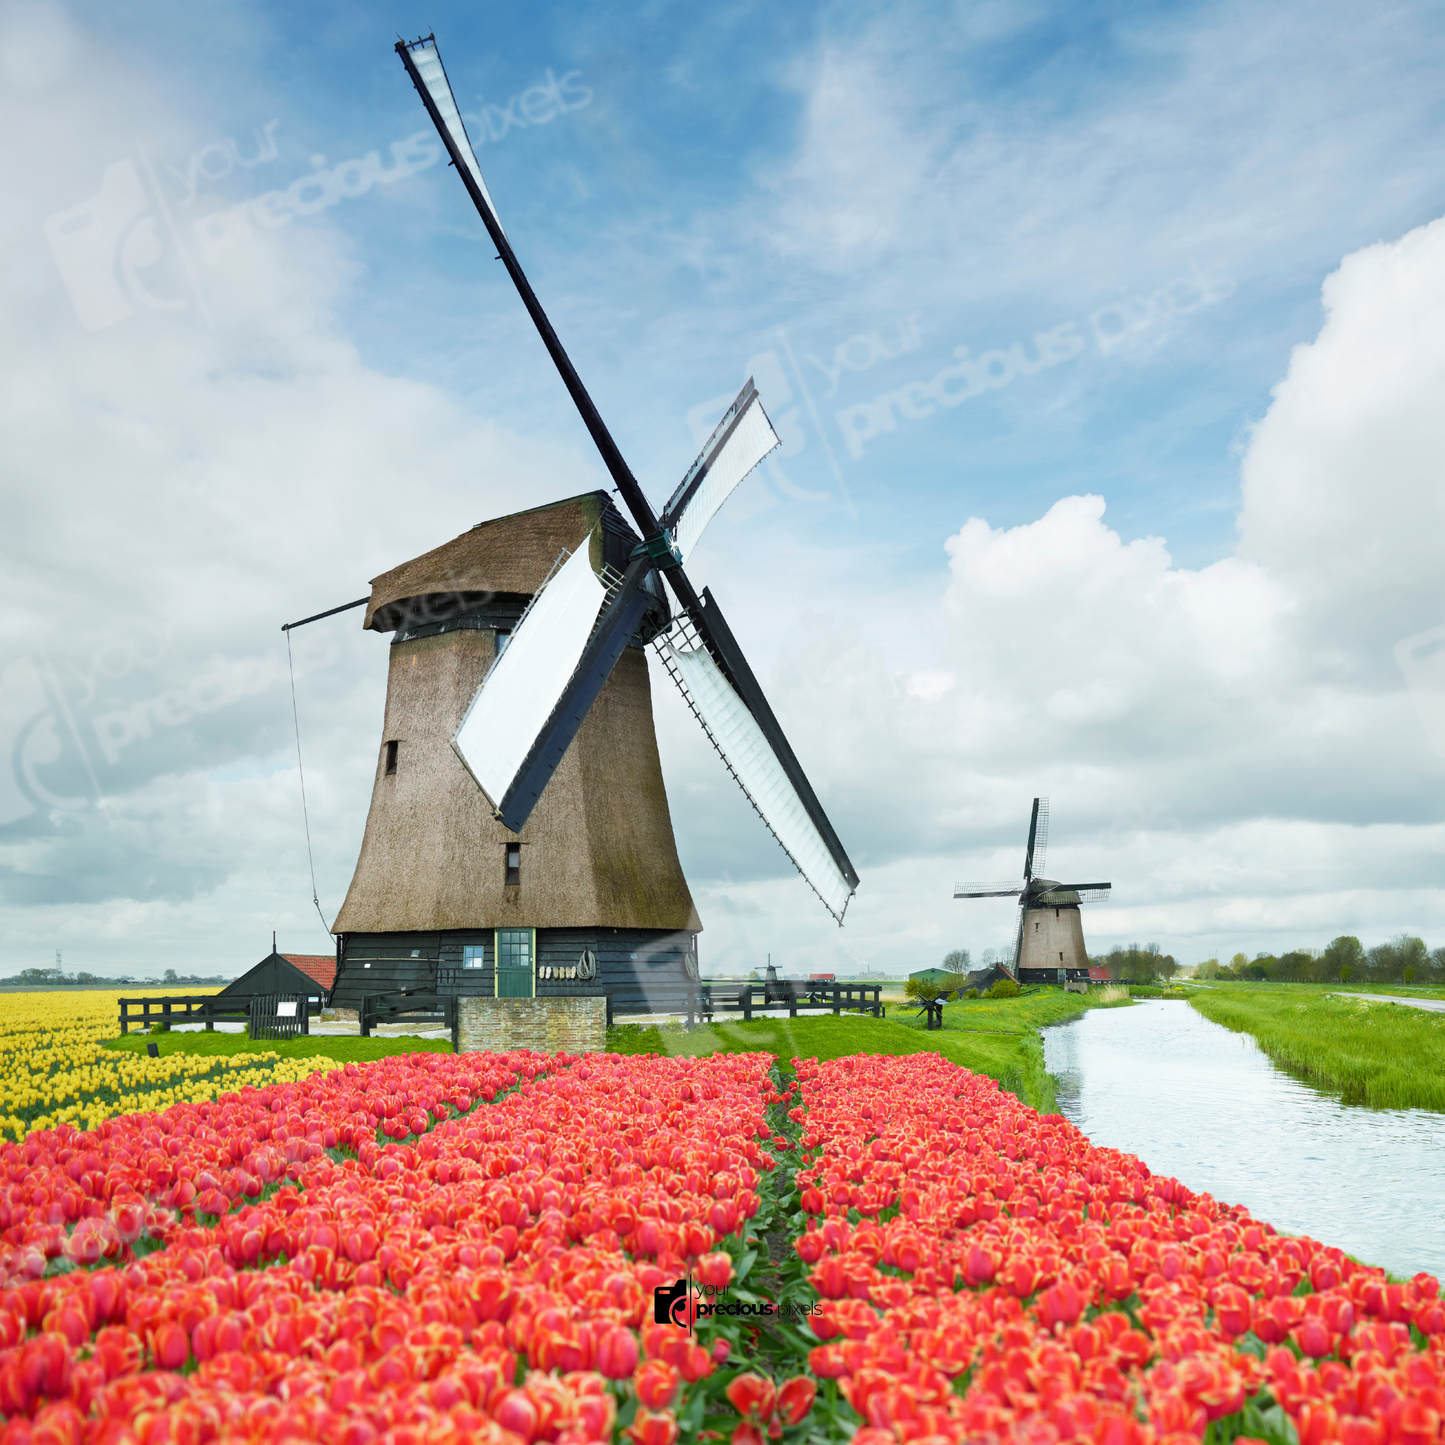 Netherlands Photo Book Template